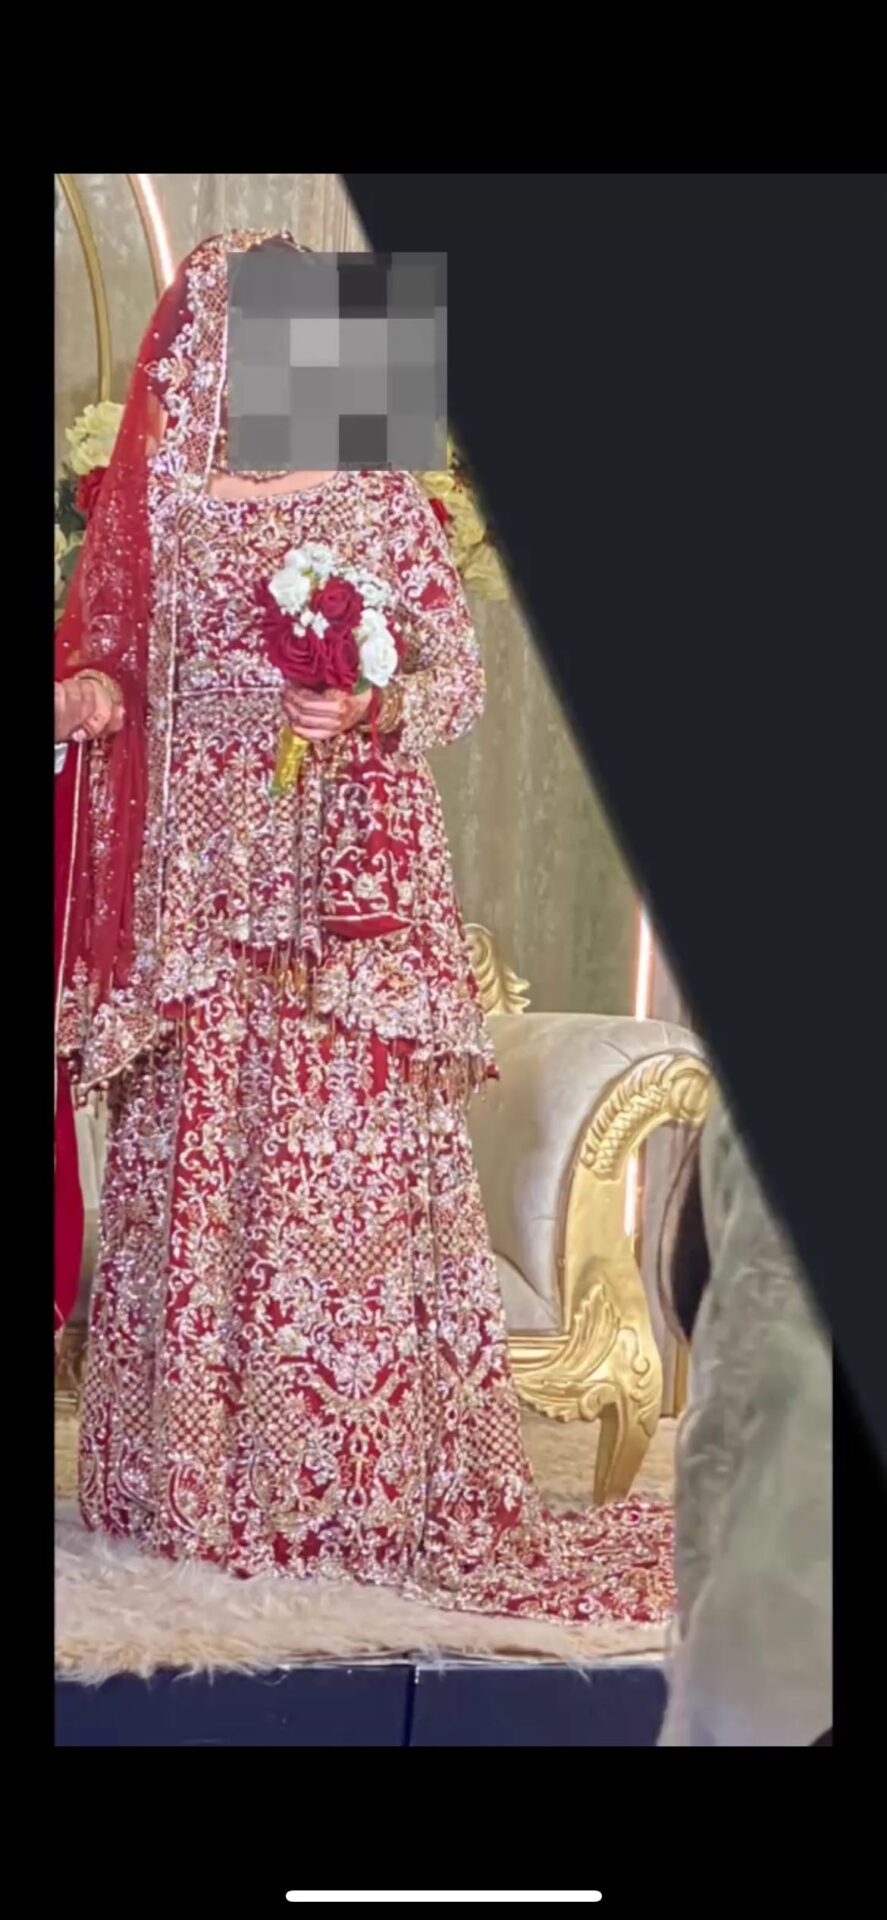 Red bridal wedding dress